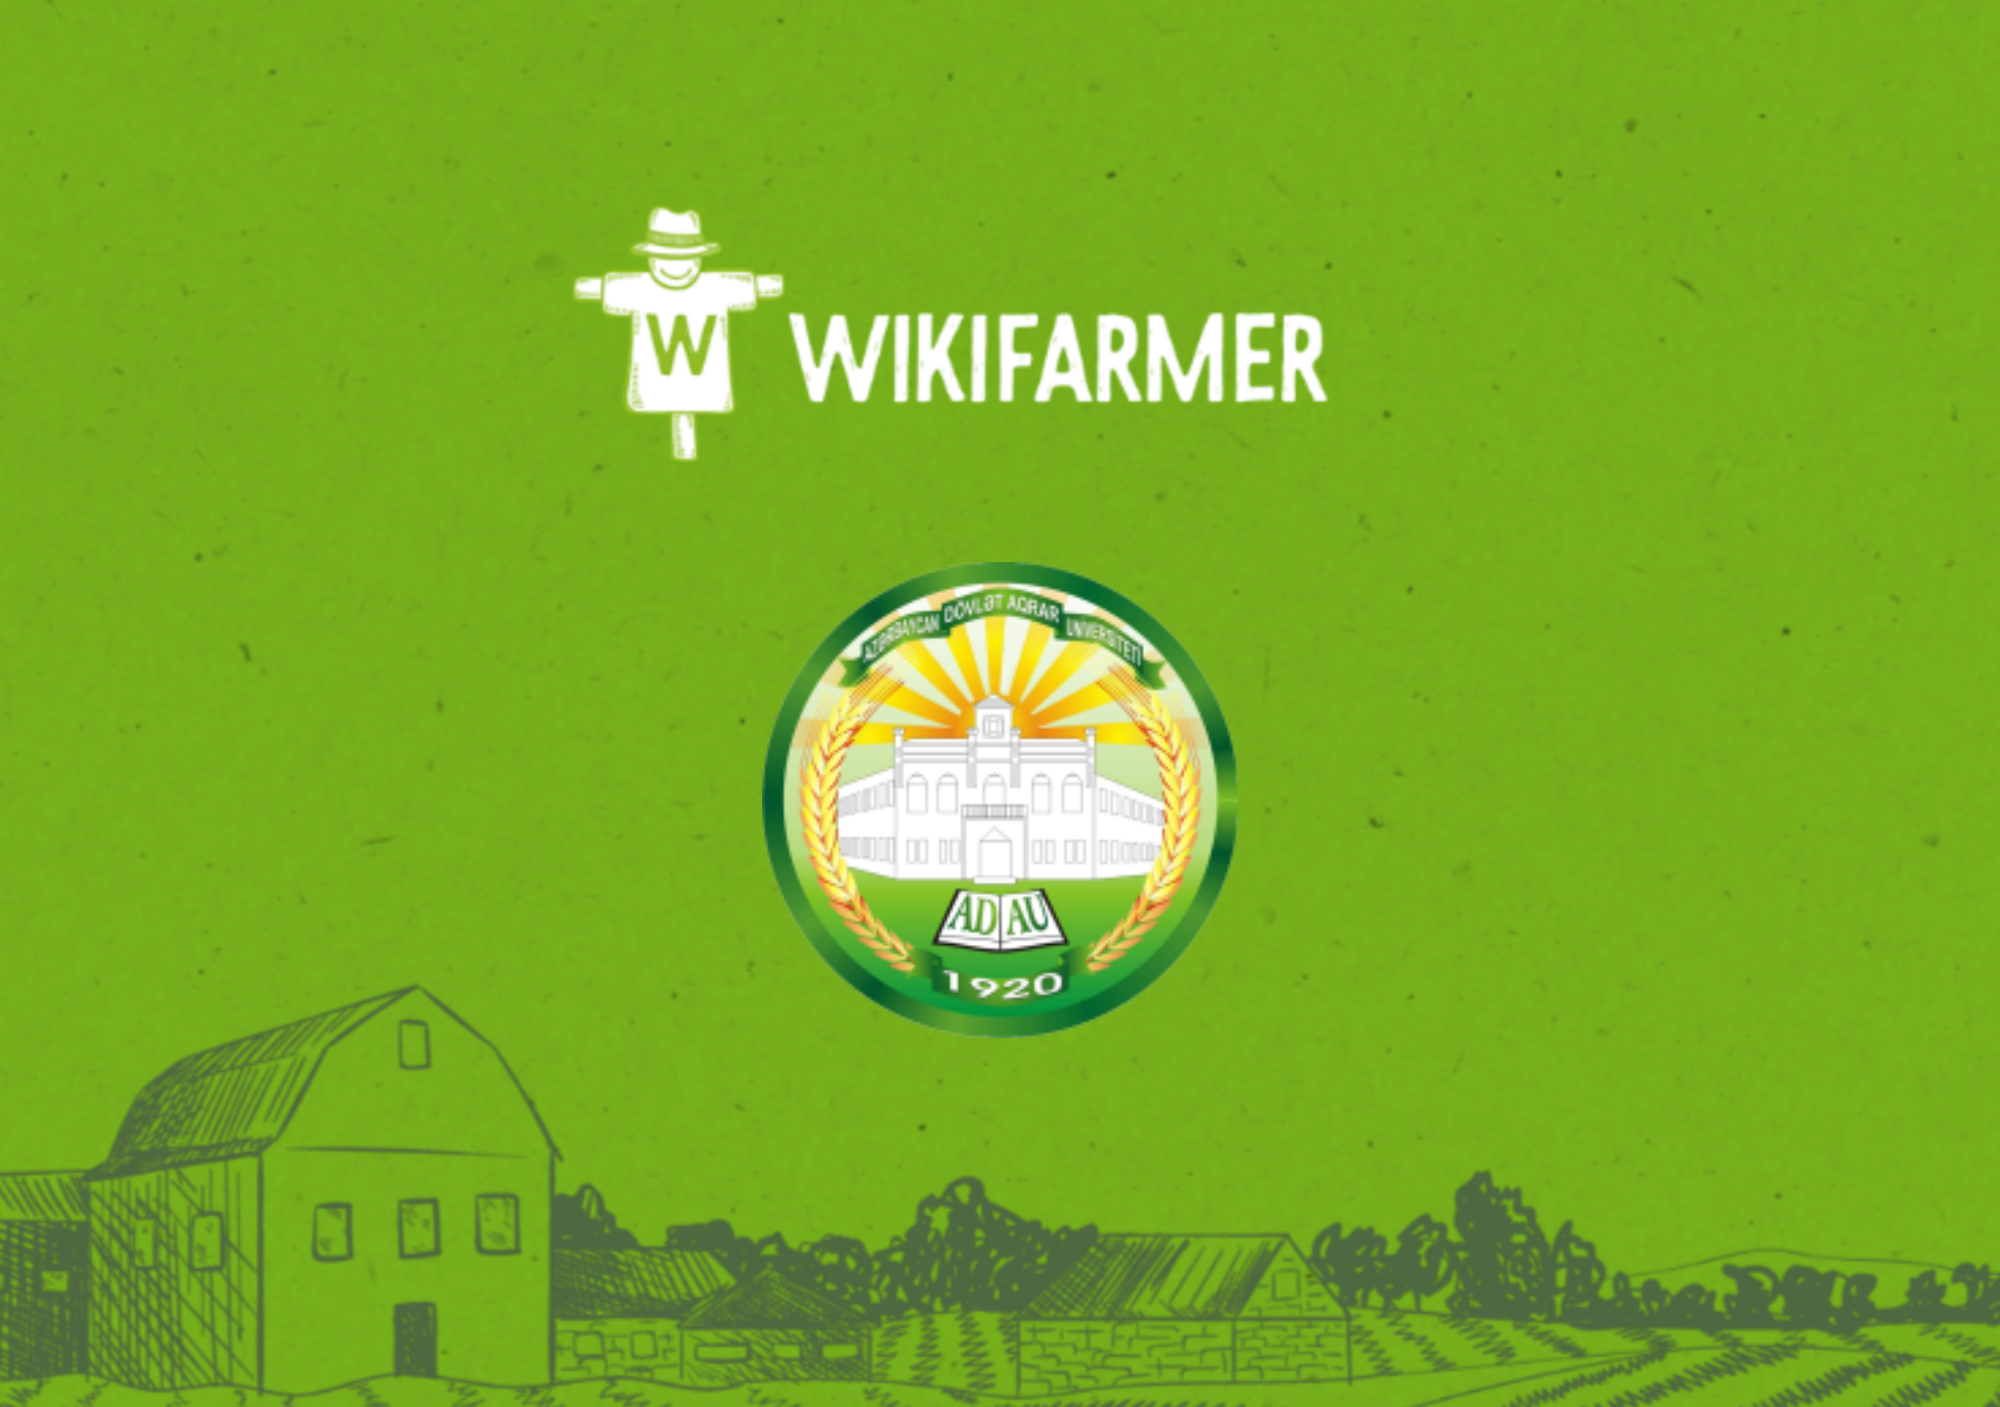 Partnership between Wikifarmer and Azerbaijan State Agricultural University (ADAU)